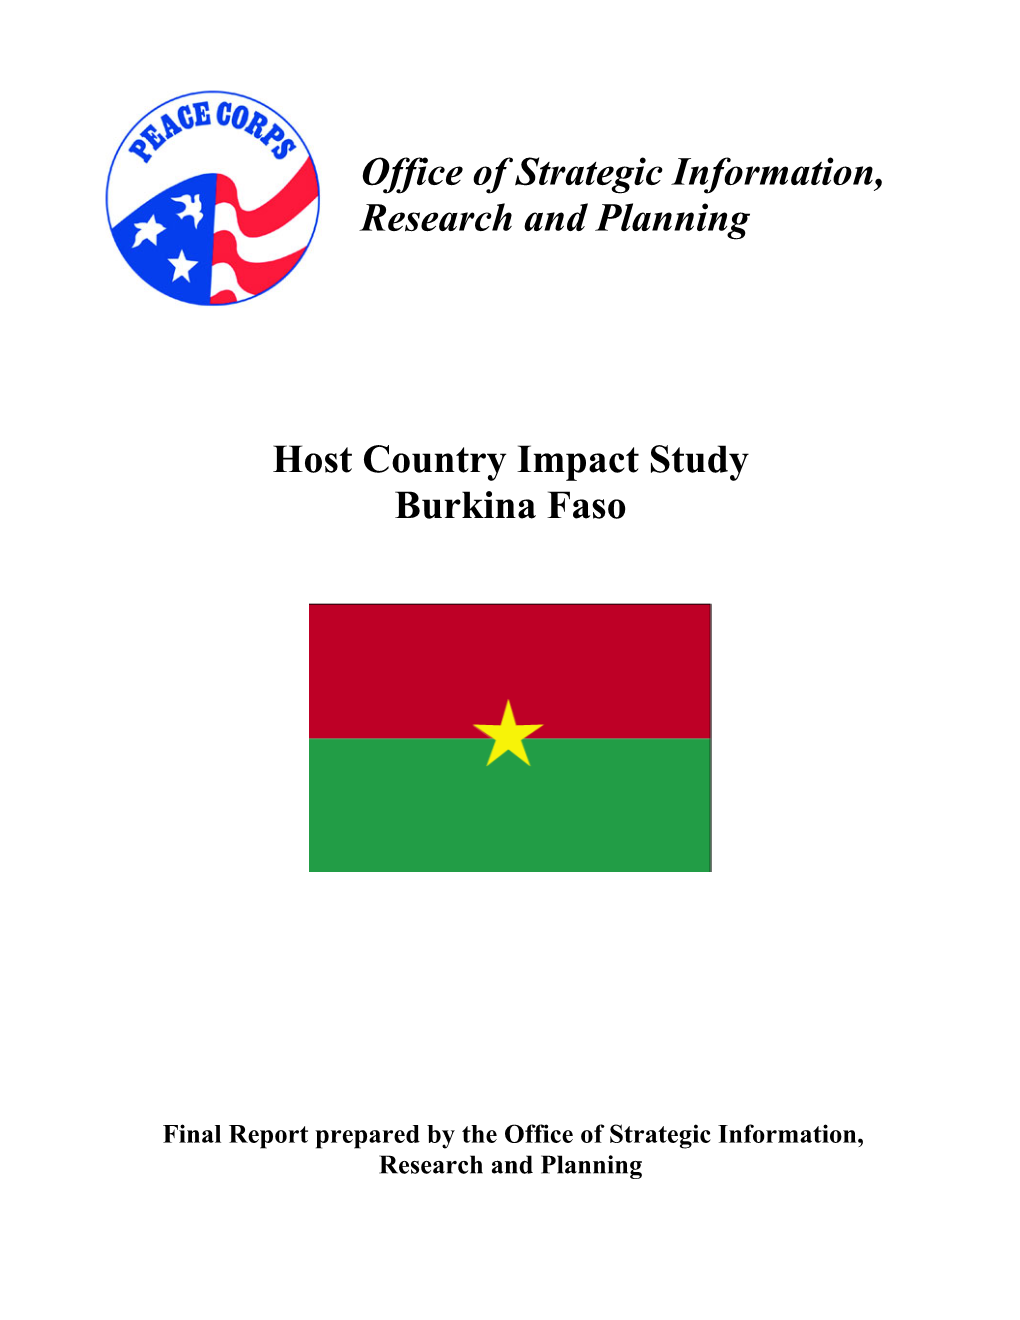 Host Country Impact Study: Burkina Faso